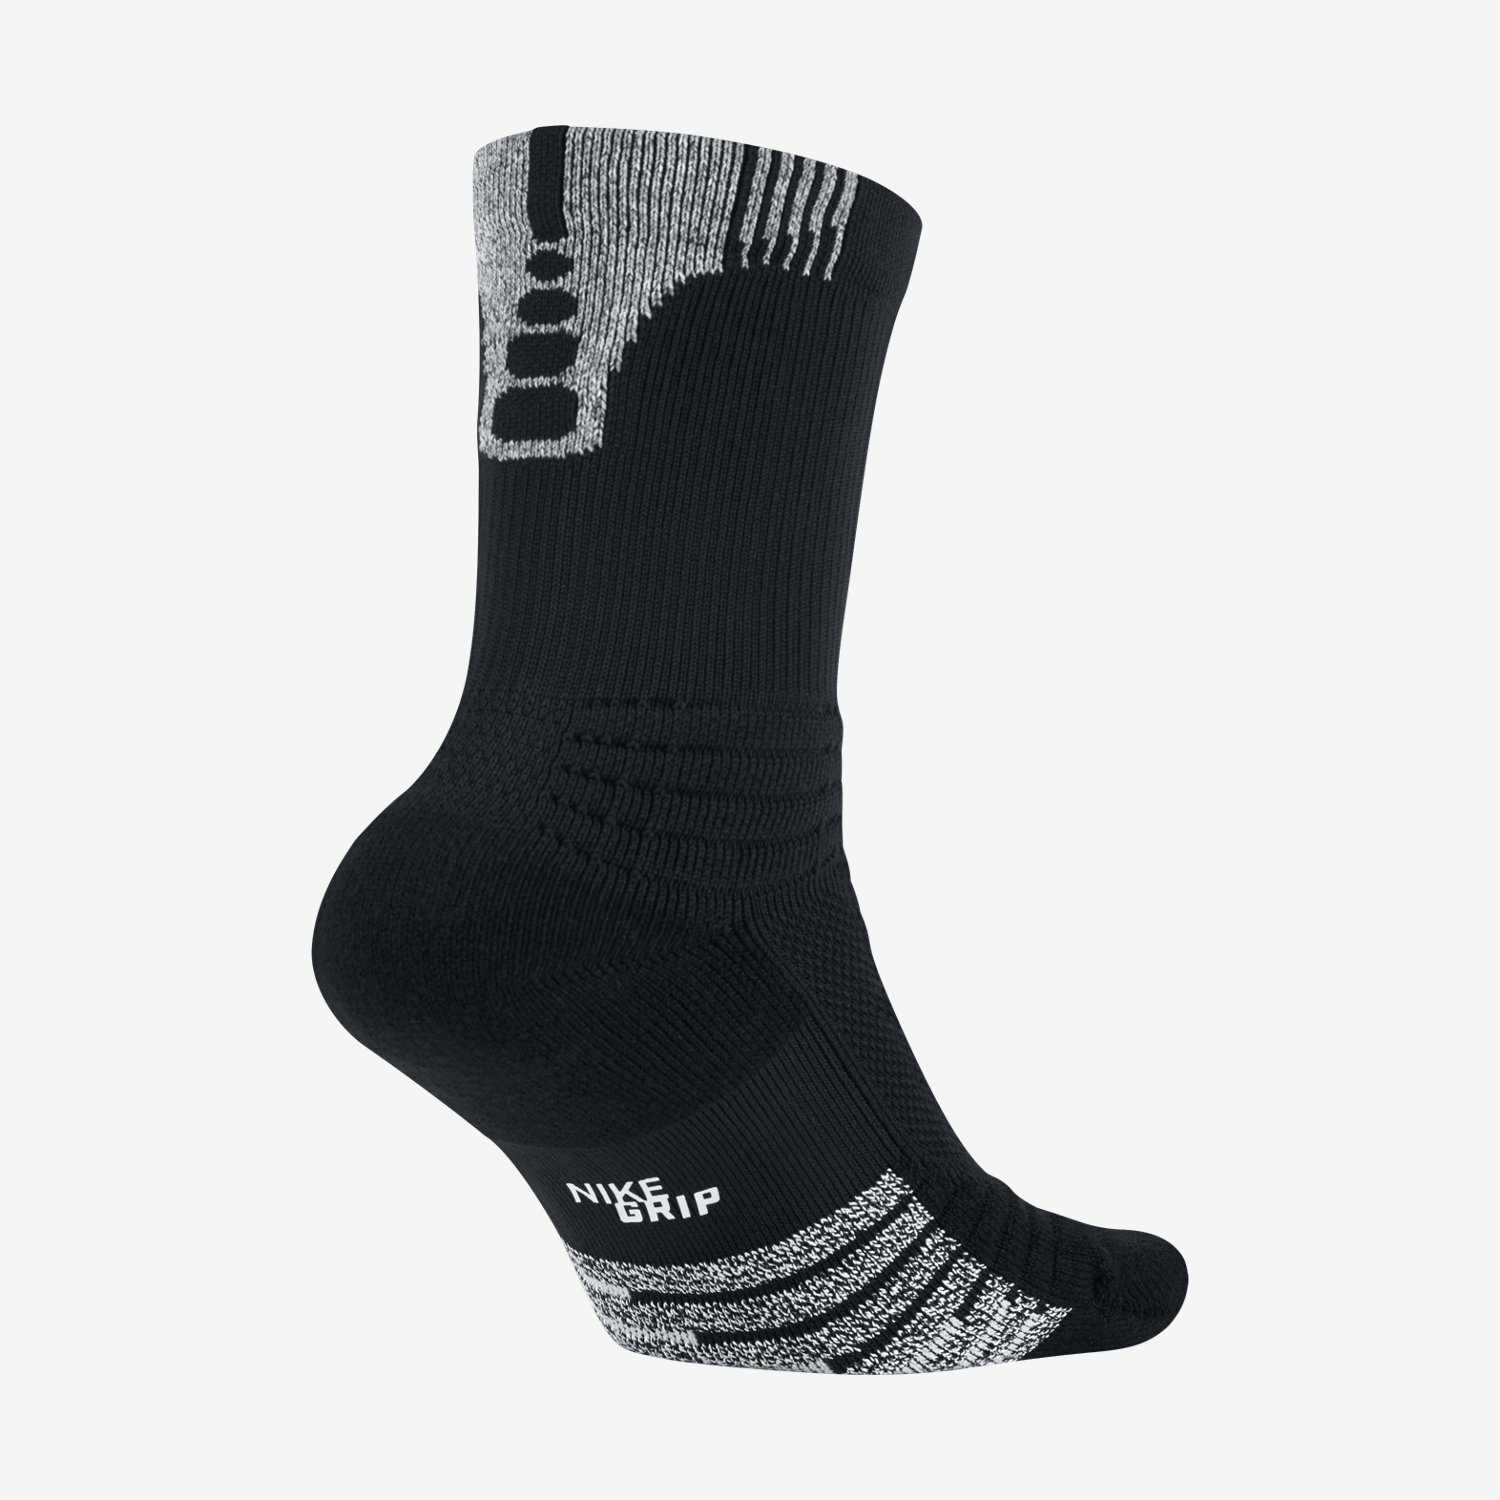 NikeGrip Elite Versatility Crew - Basketball Socks